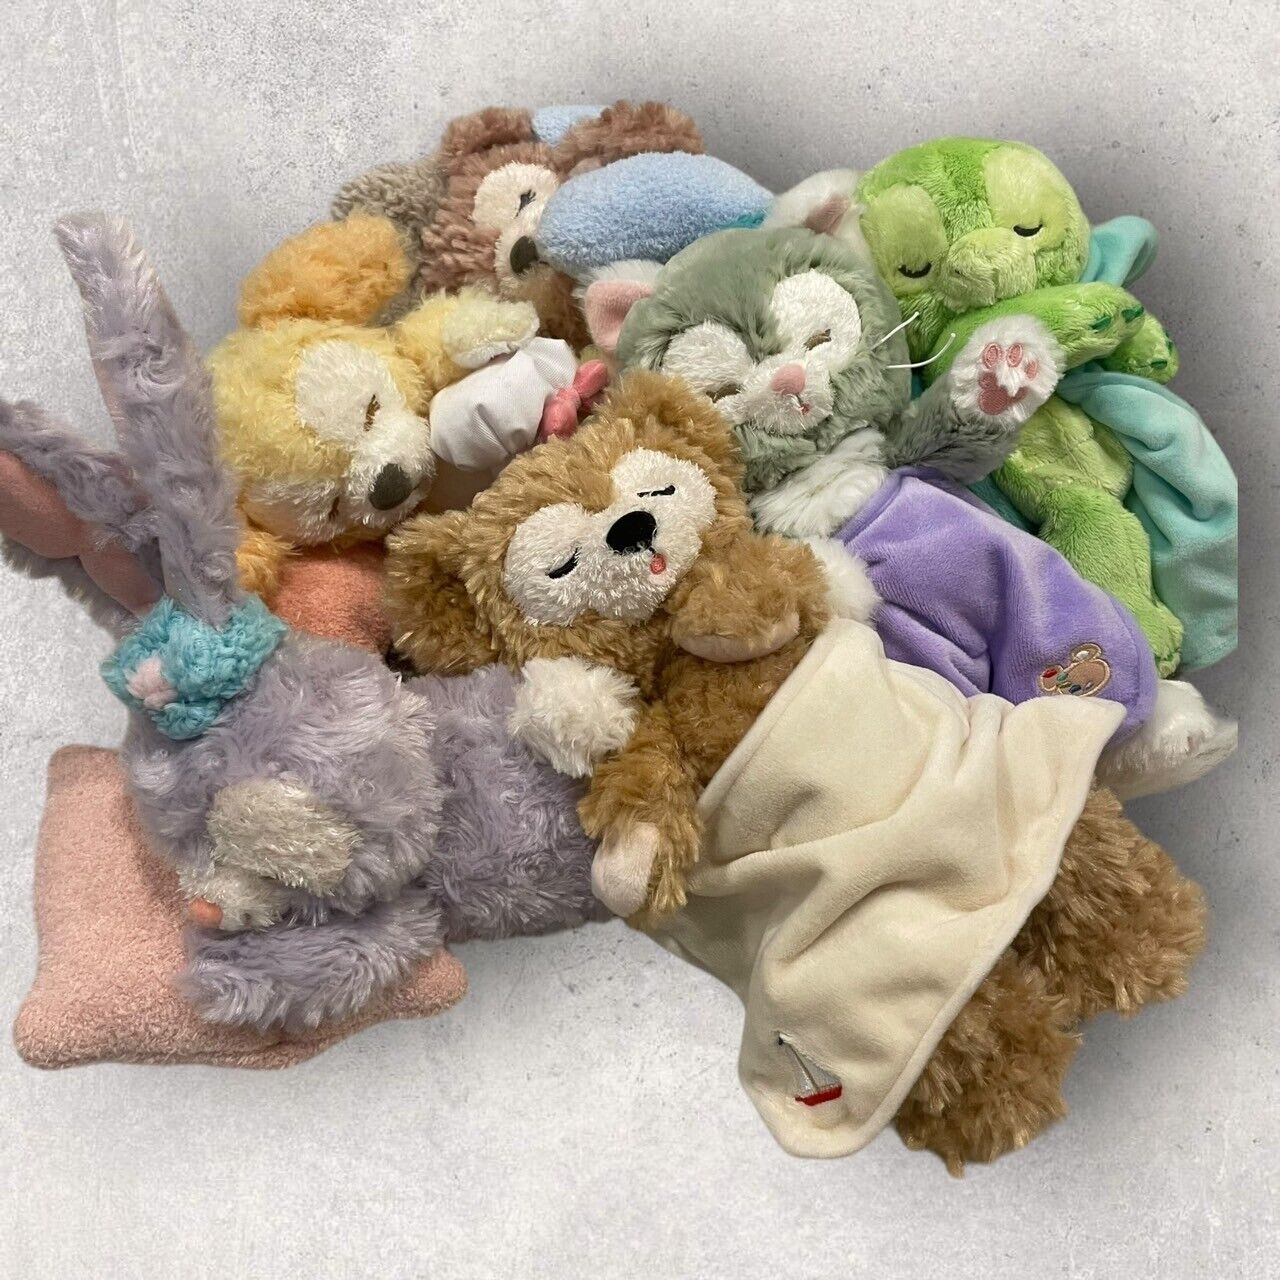 【MINT】 Tokyo Disney Sea limited Sleeping Plush toy Duffy & friends set Japan